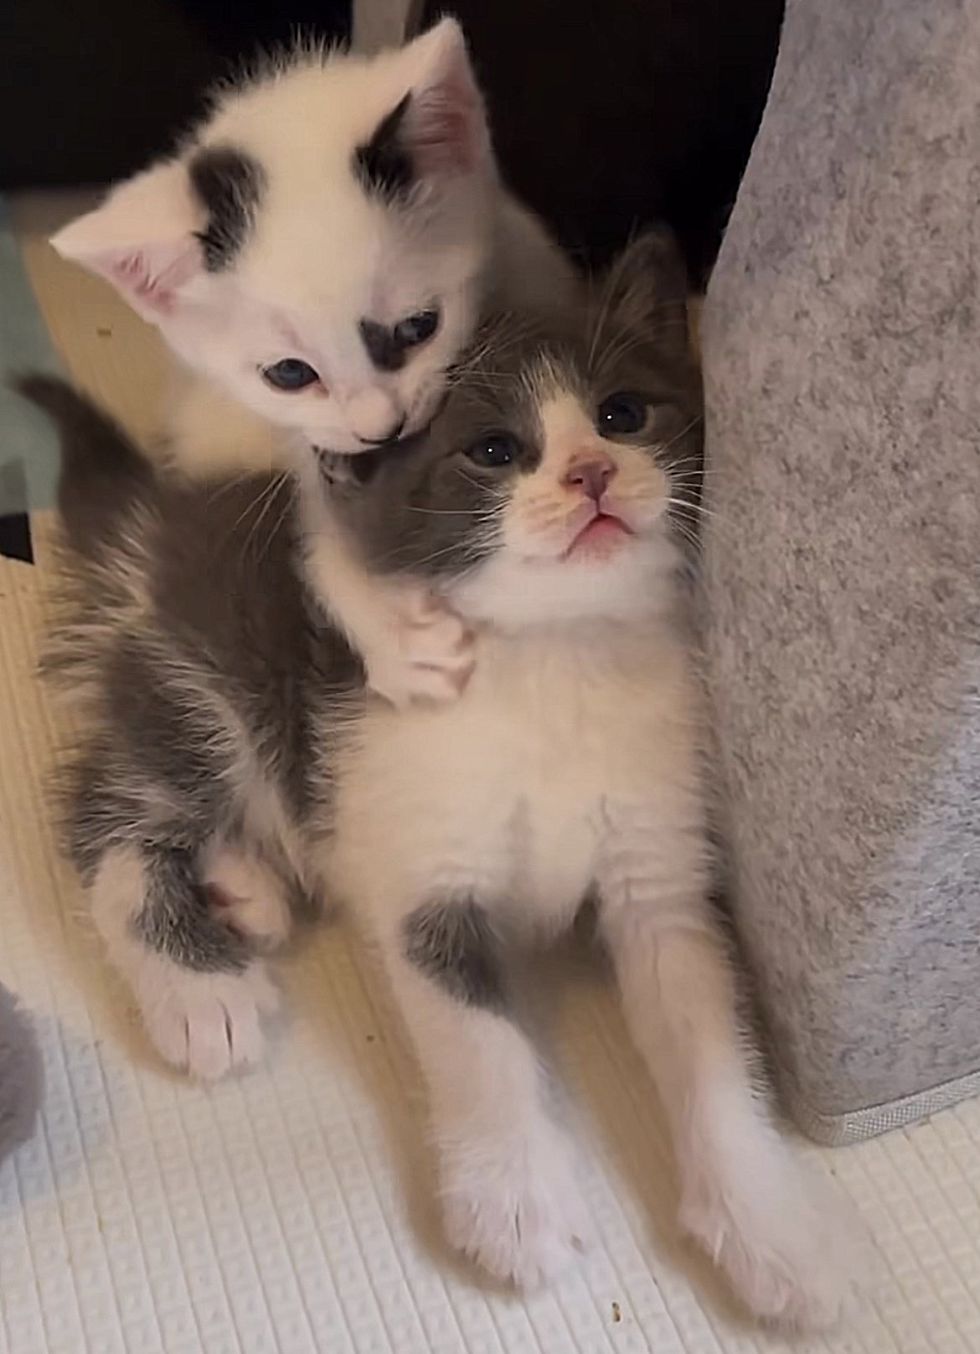 kittens wrestling cute